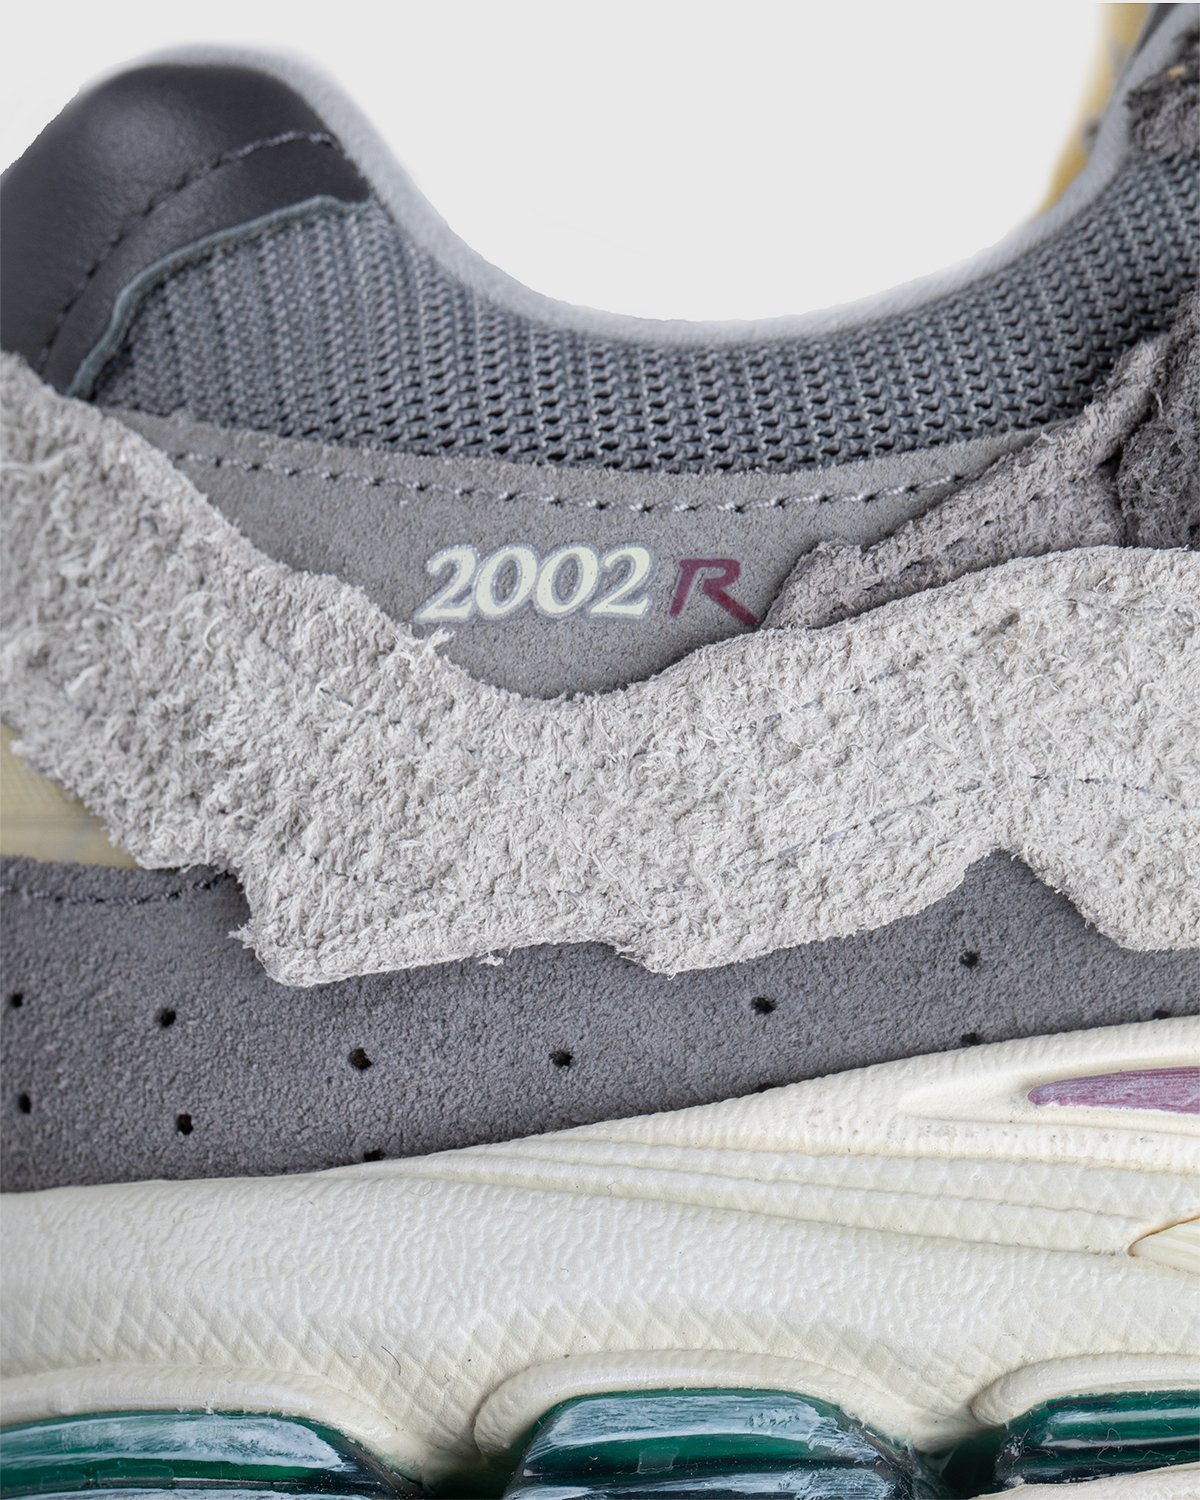 New Balance - M2002RDA Rain Cloud - Footwear - Grey - Image 6